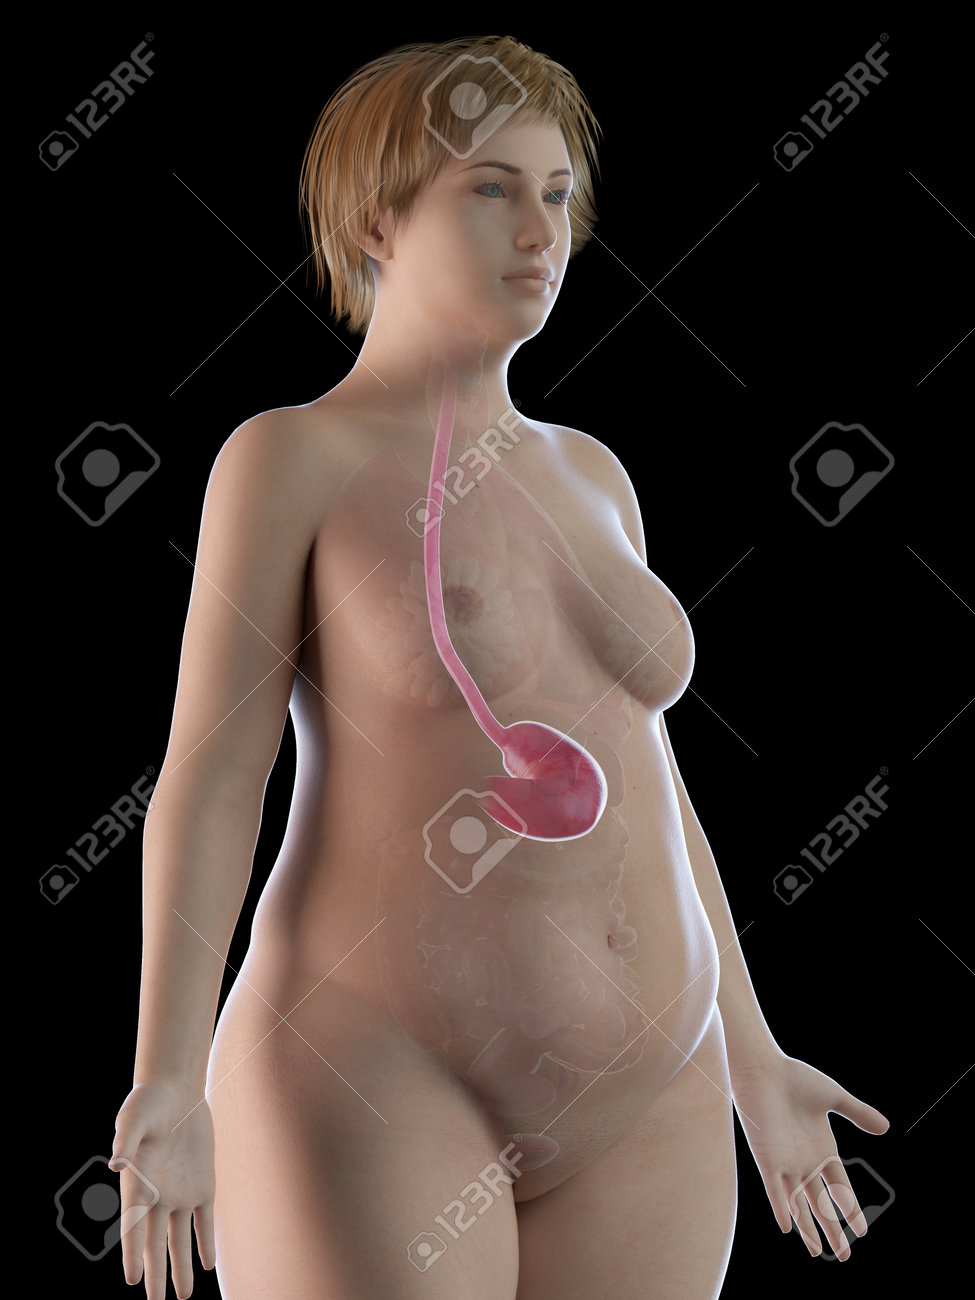 callum metcalf add fotos de mujeres obesas photo